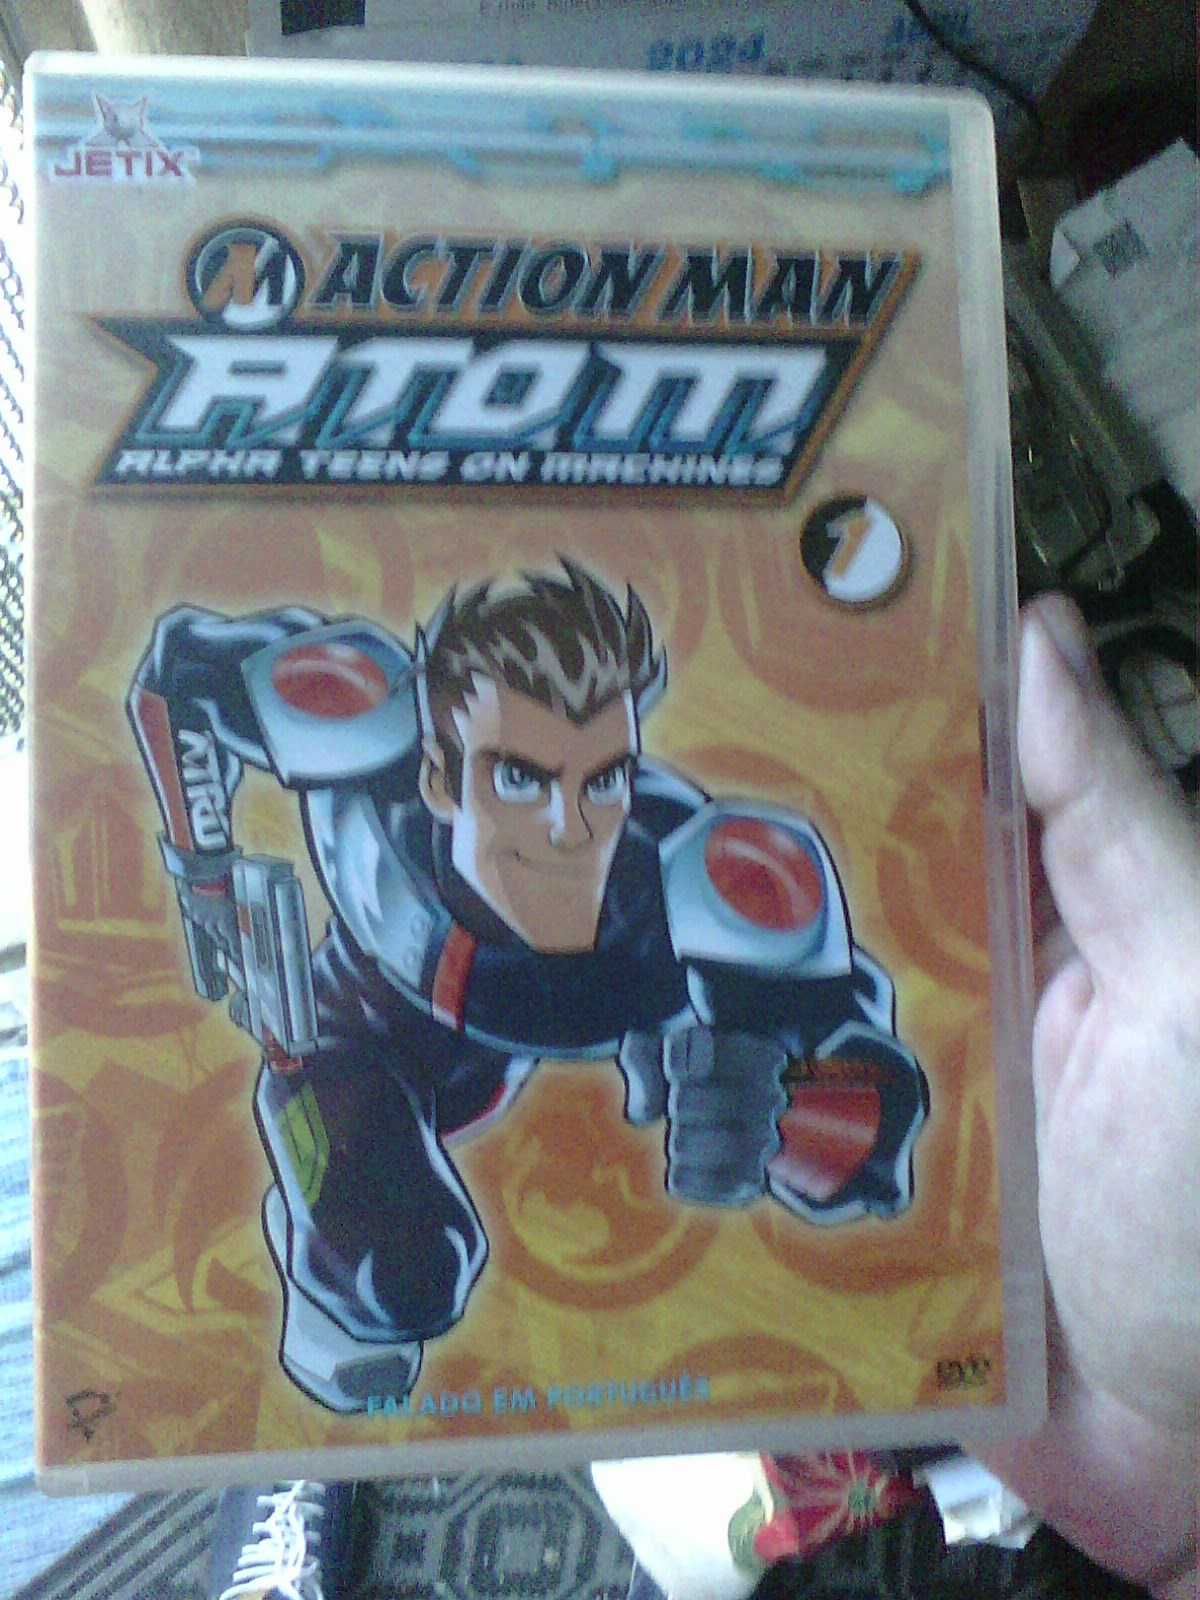 Action Man: A.T.O.M  dvd1 -portes gratis